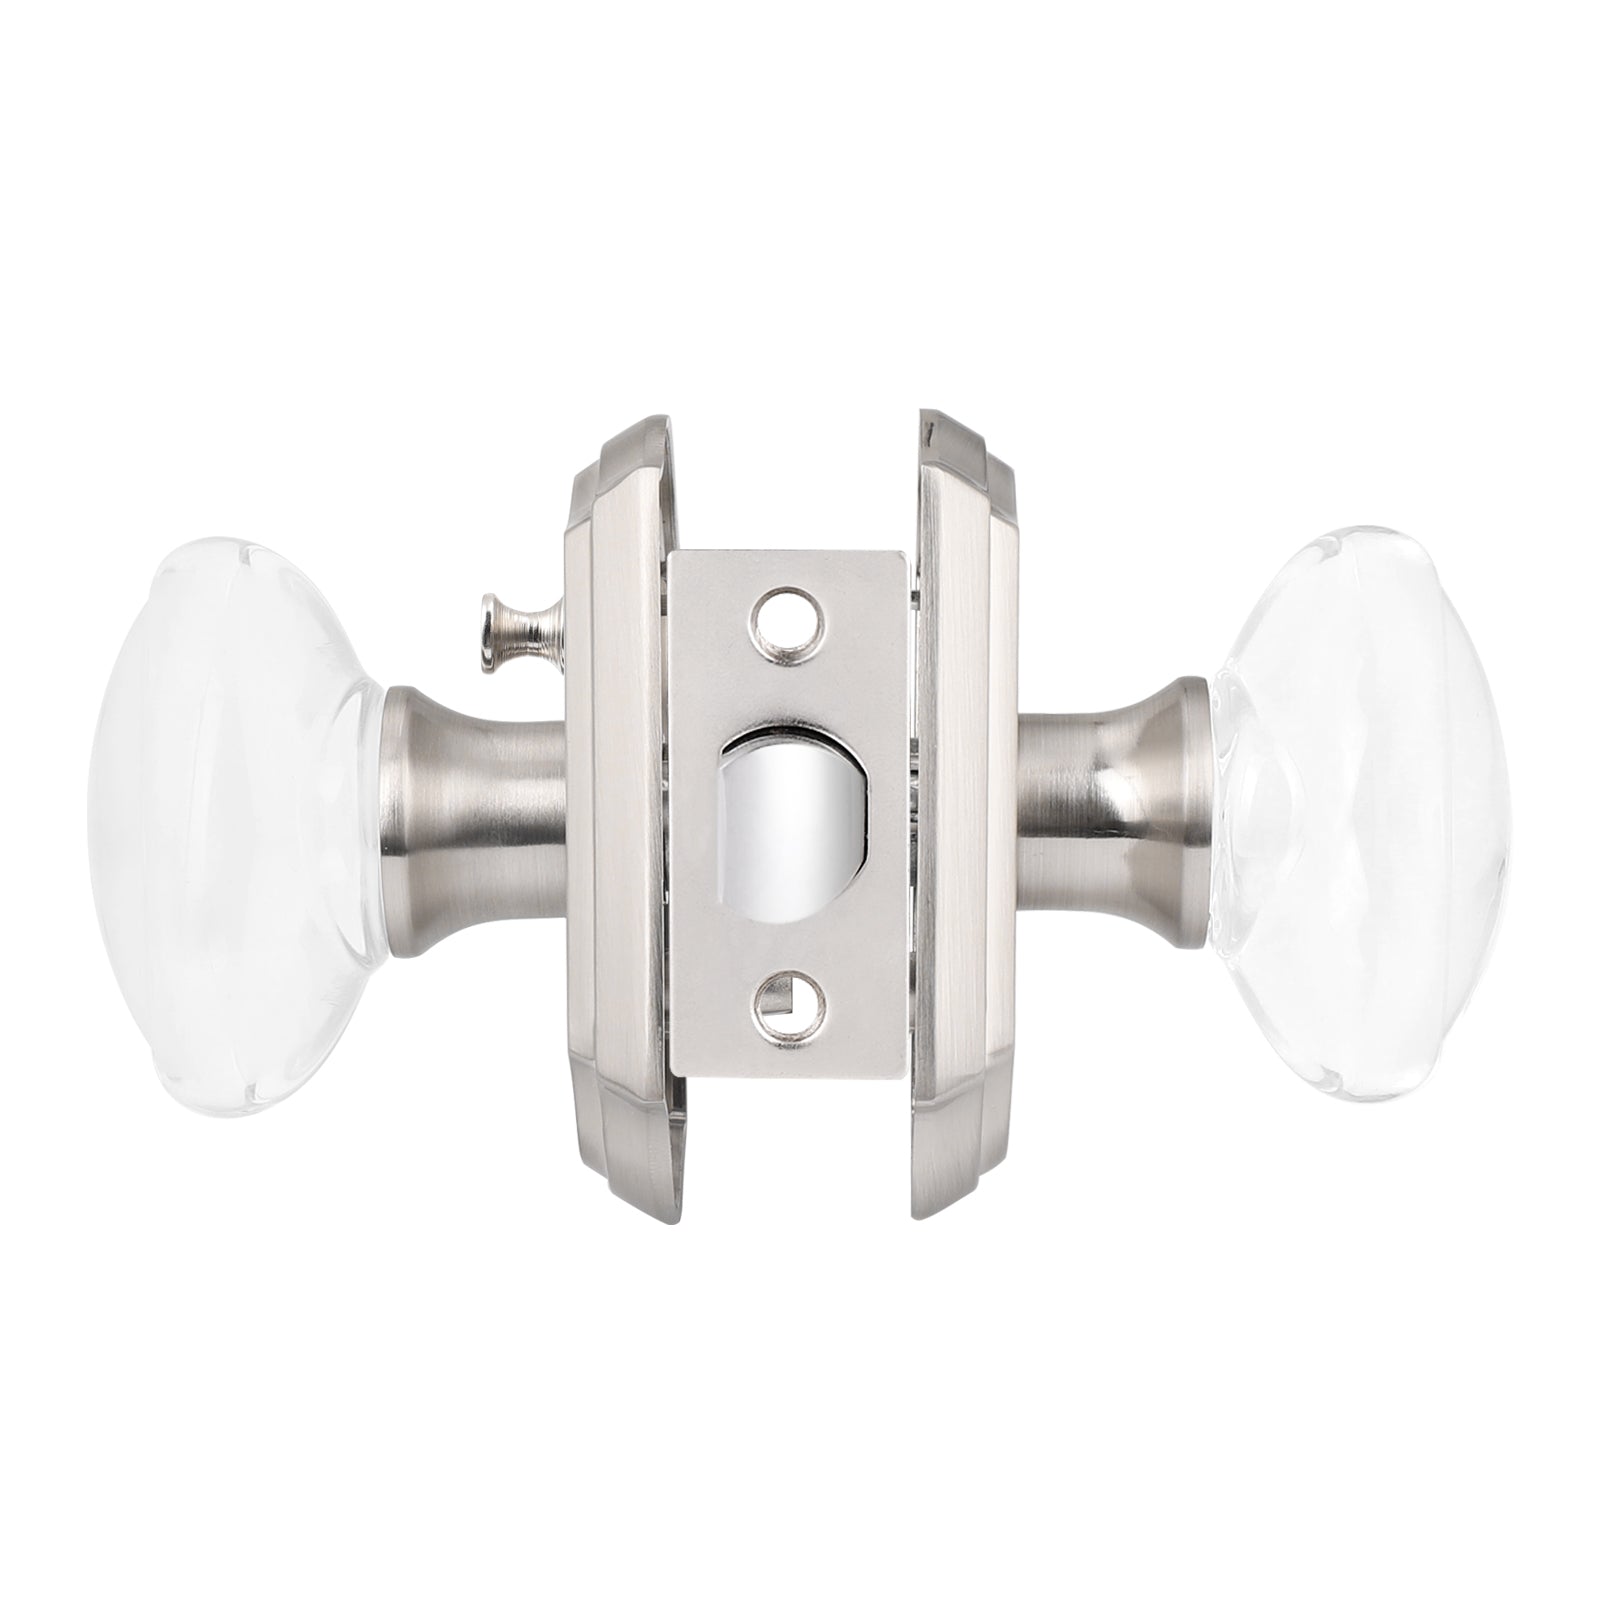 Elegant Oval Crystal Door Knob Lock with Satin Nickel Arched Rosette DLC9SNBK - Probrico